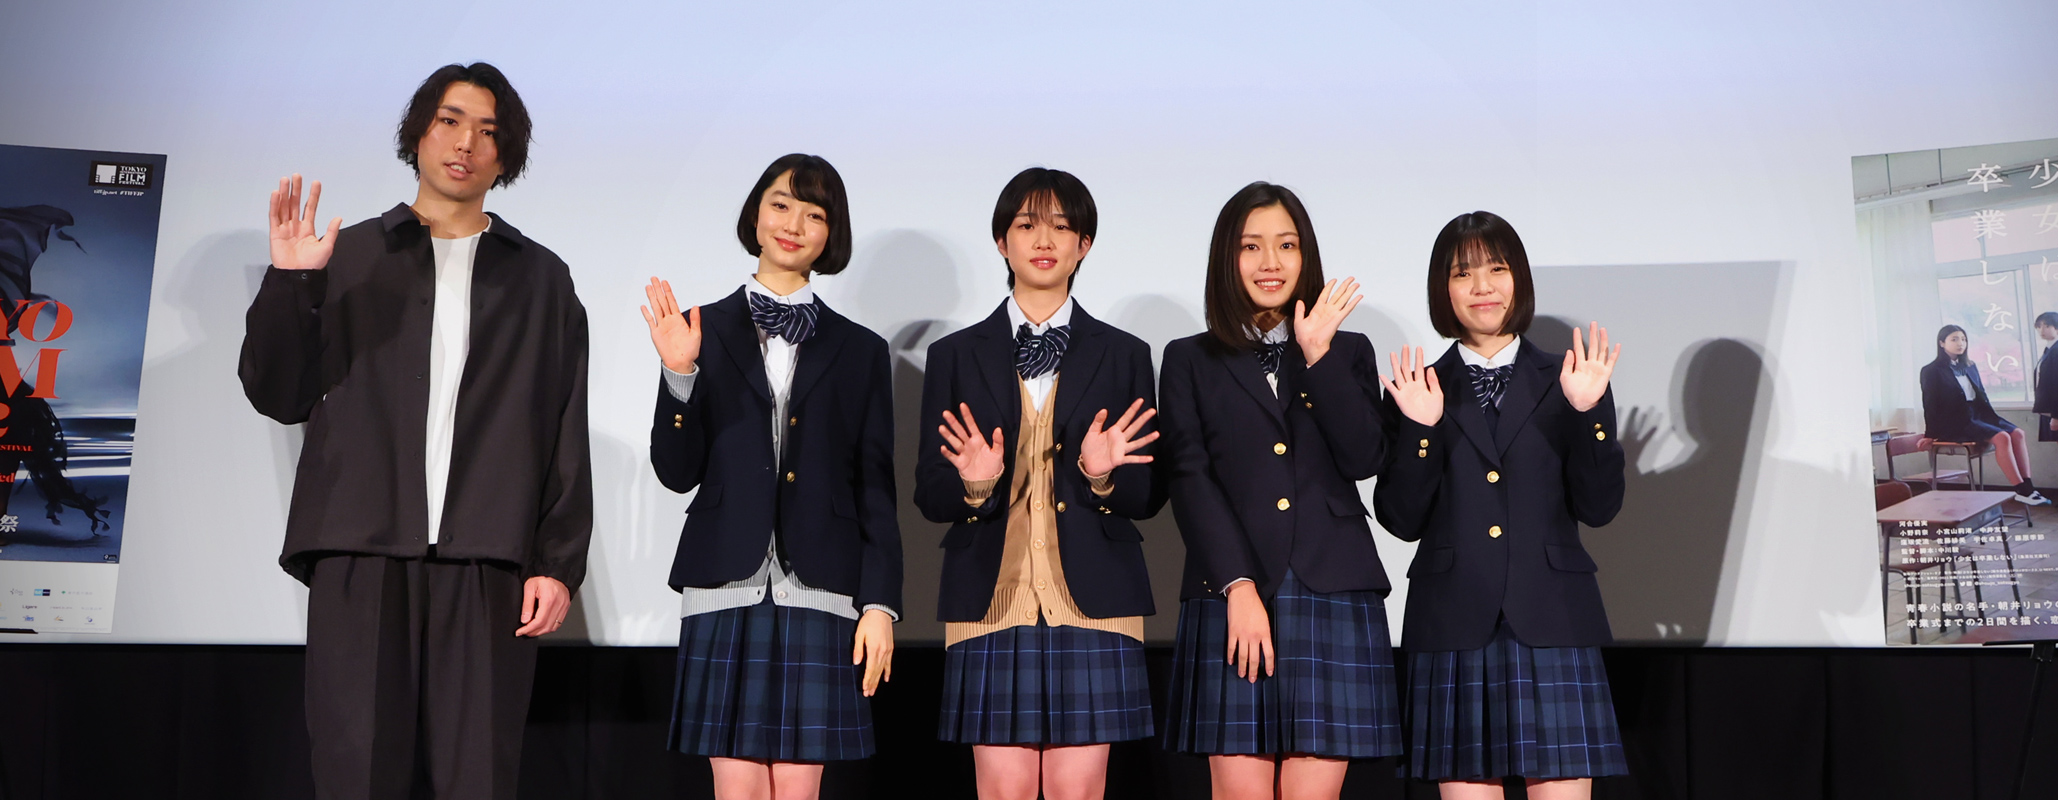 Sayonara, Girls. Greetings from the Stage: Q&A: Nakagawa Shun (Director), Kawai Yuumi (Cast), Ono Rina (Cast), Komiyama Rina (Cast), Nakai Tomo (Cast)